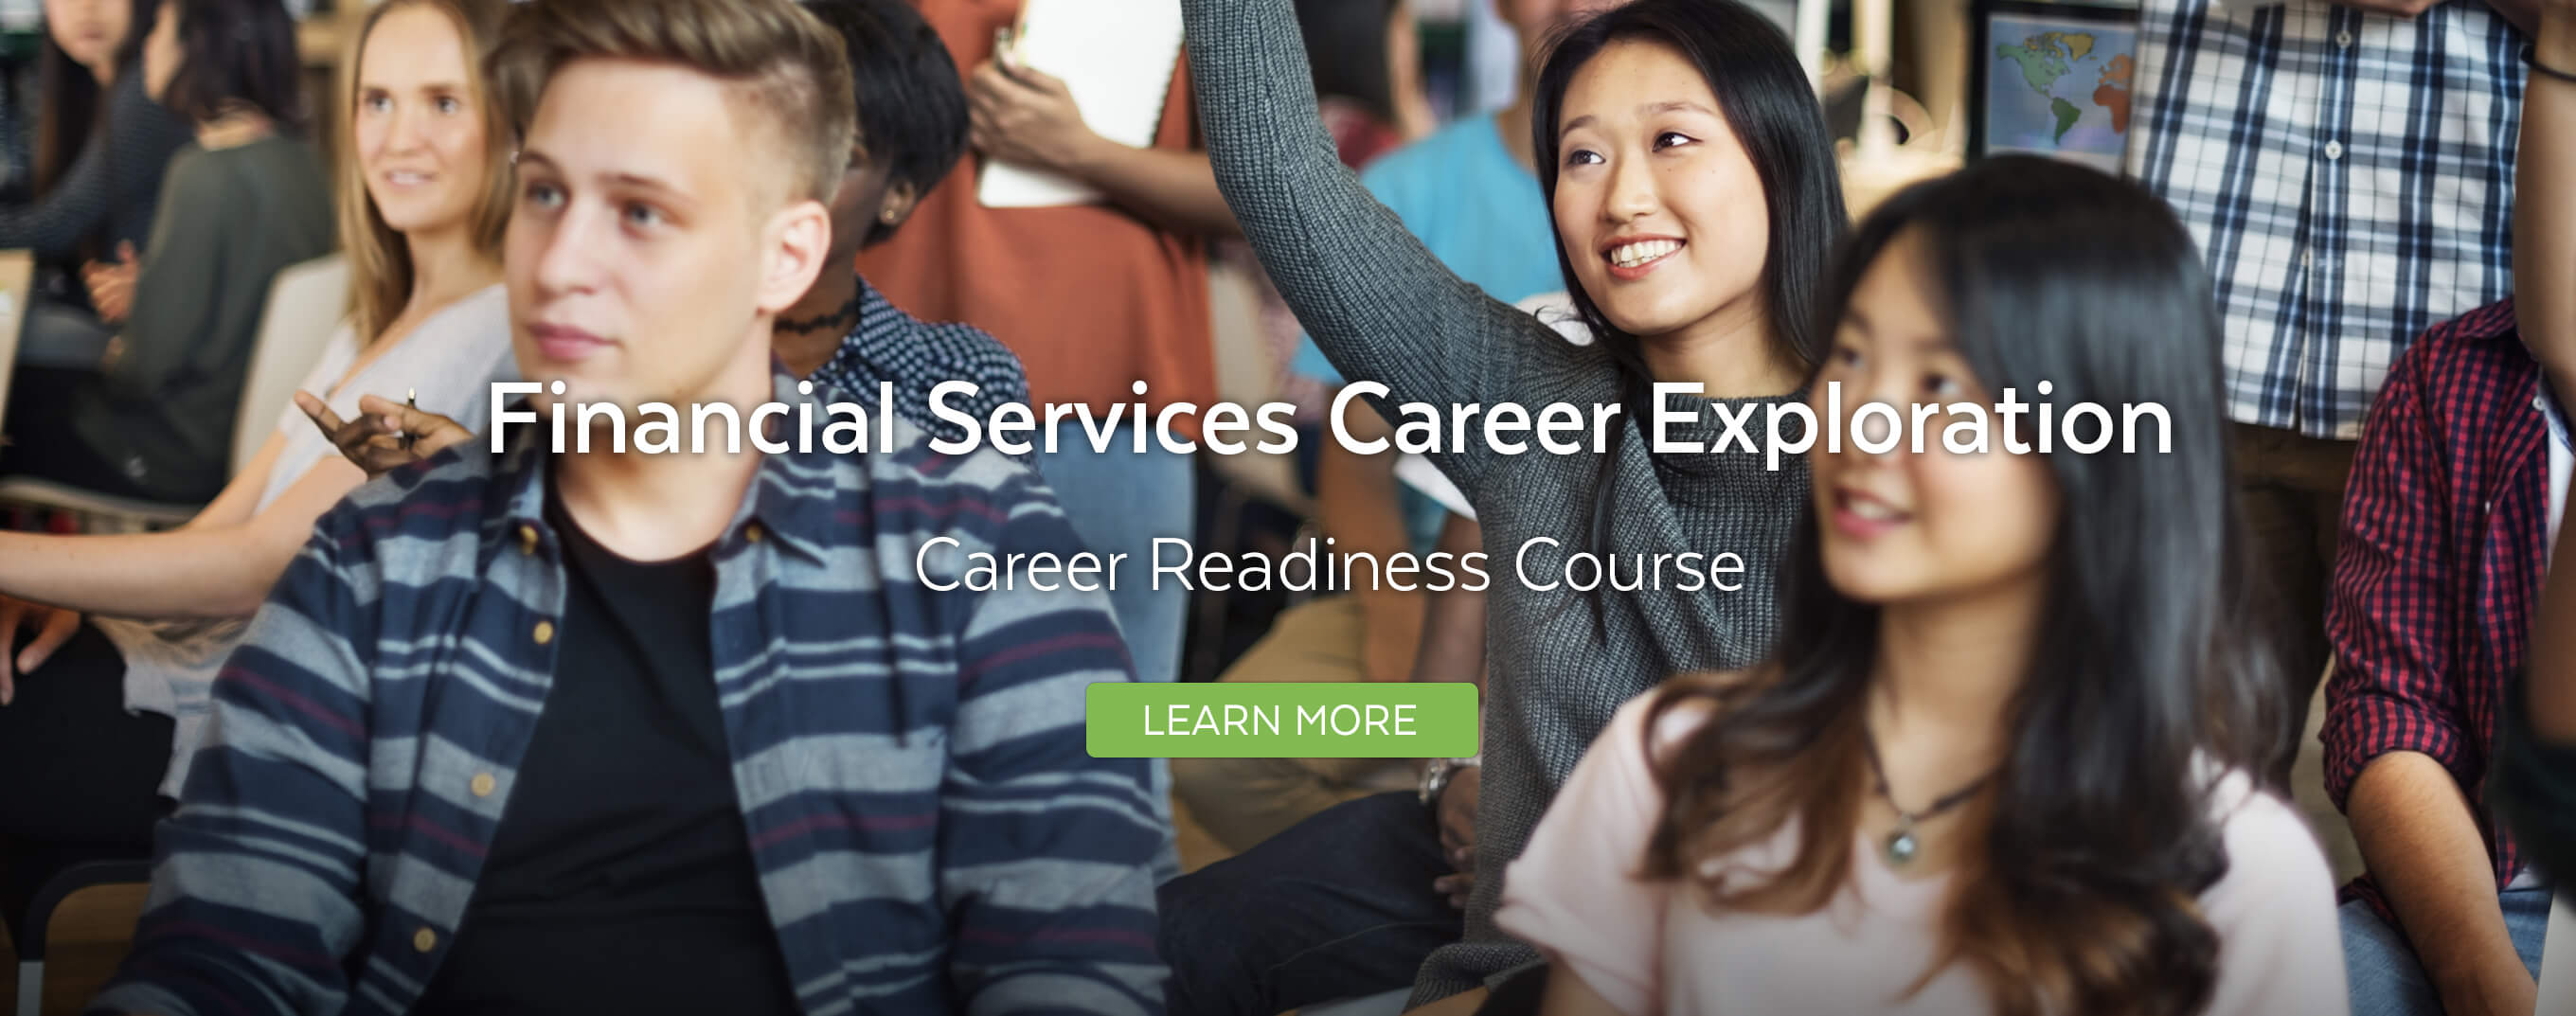 Financial Services Career Exploration Course